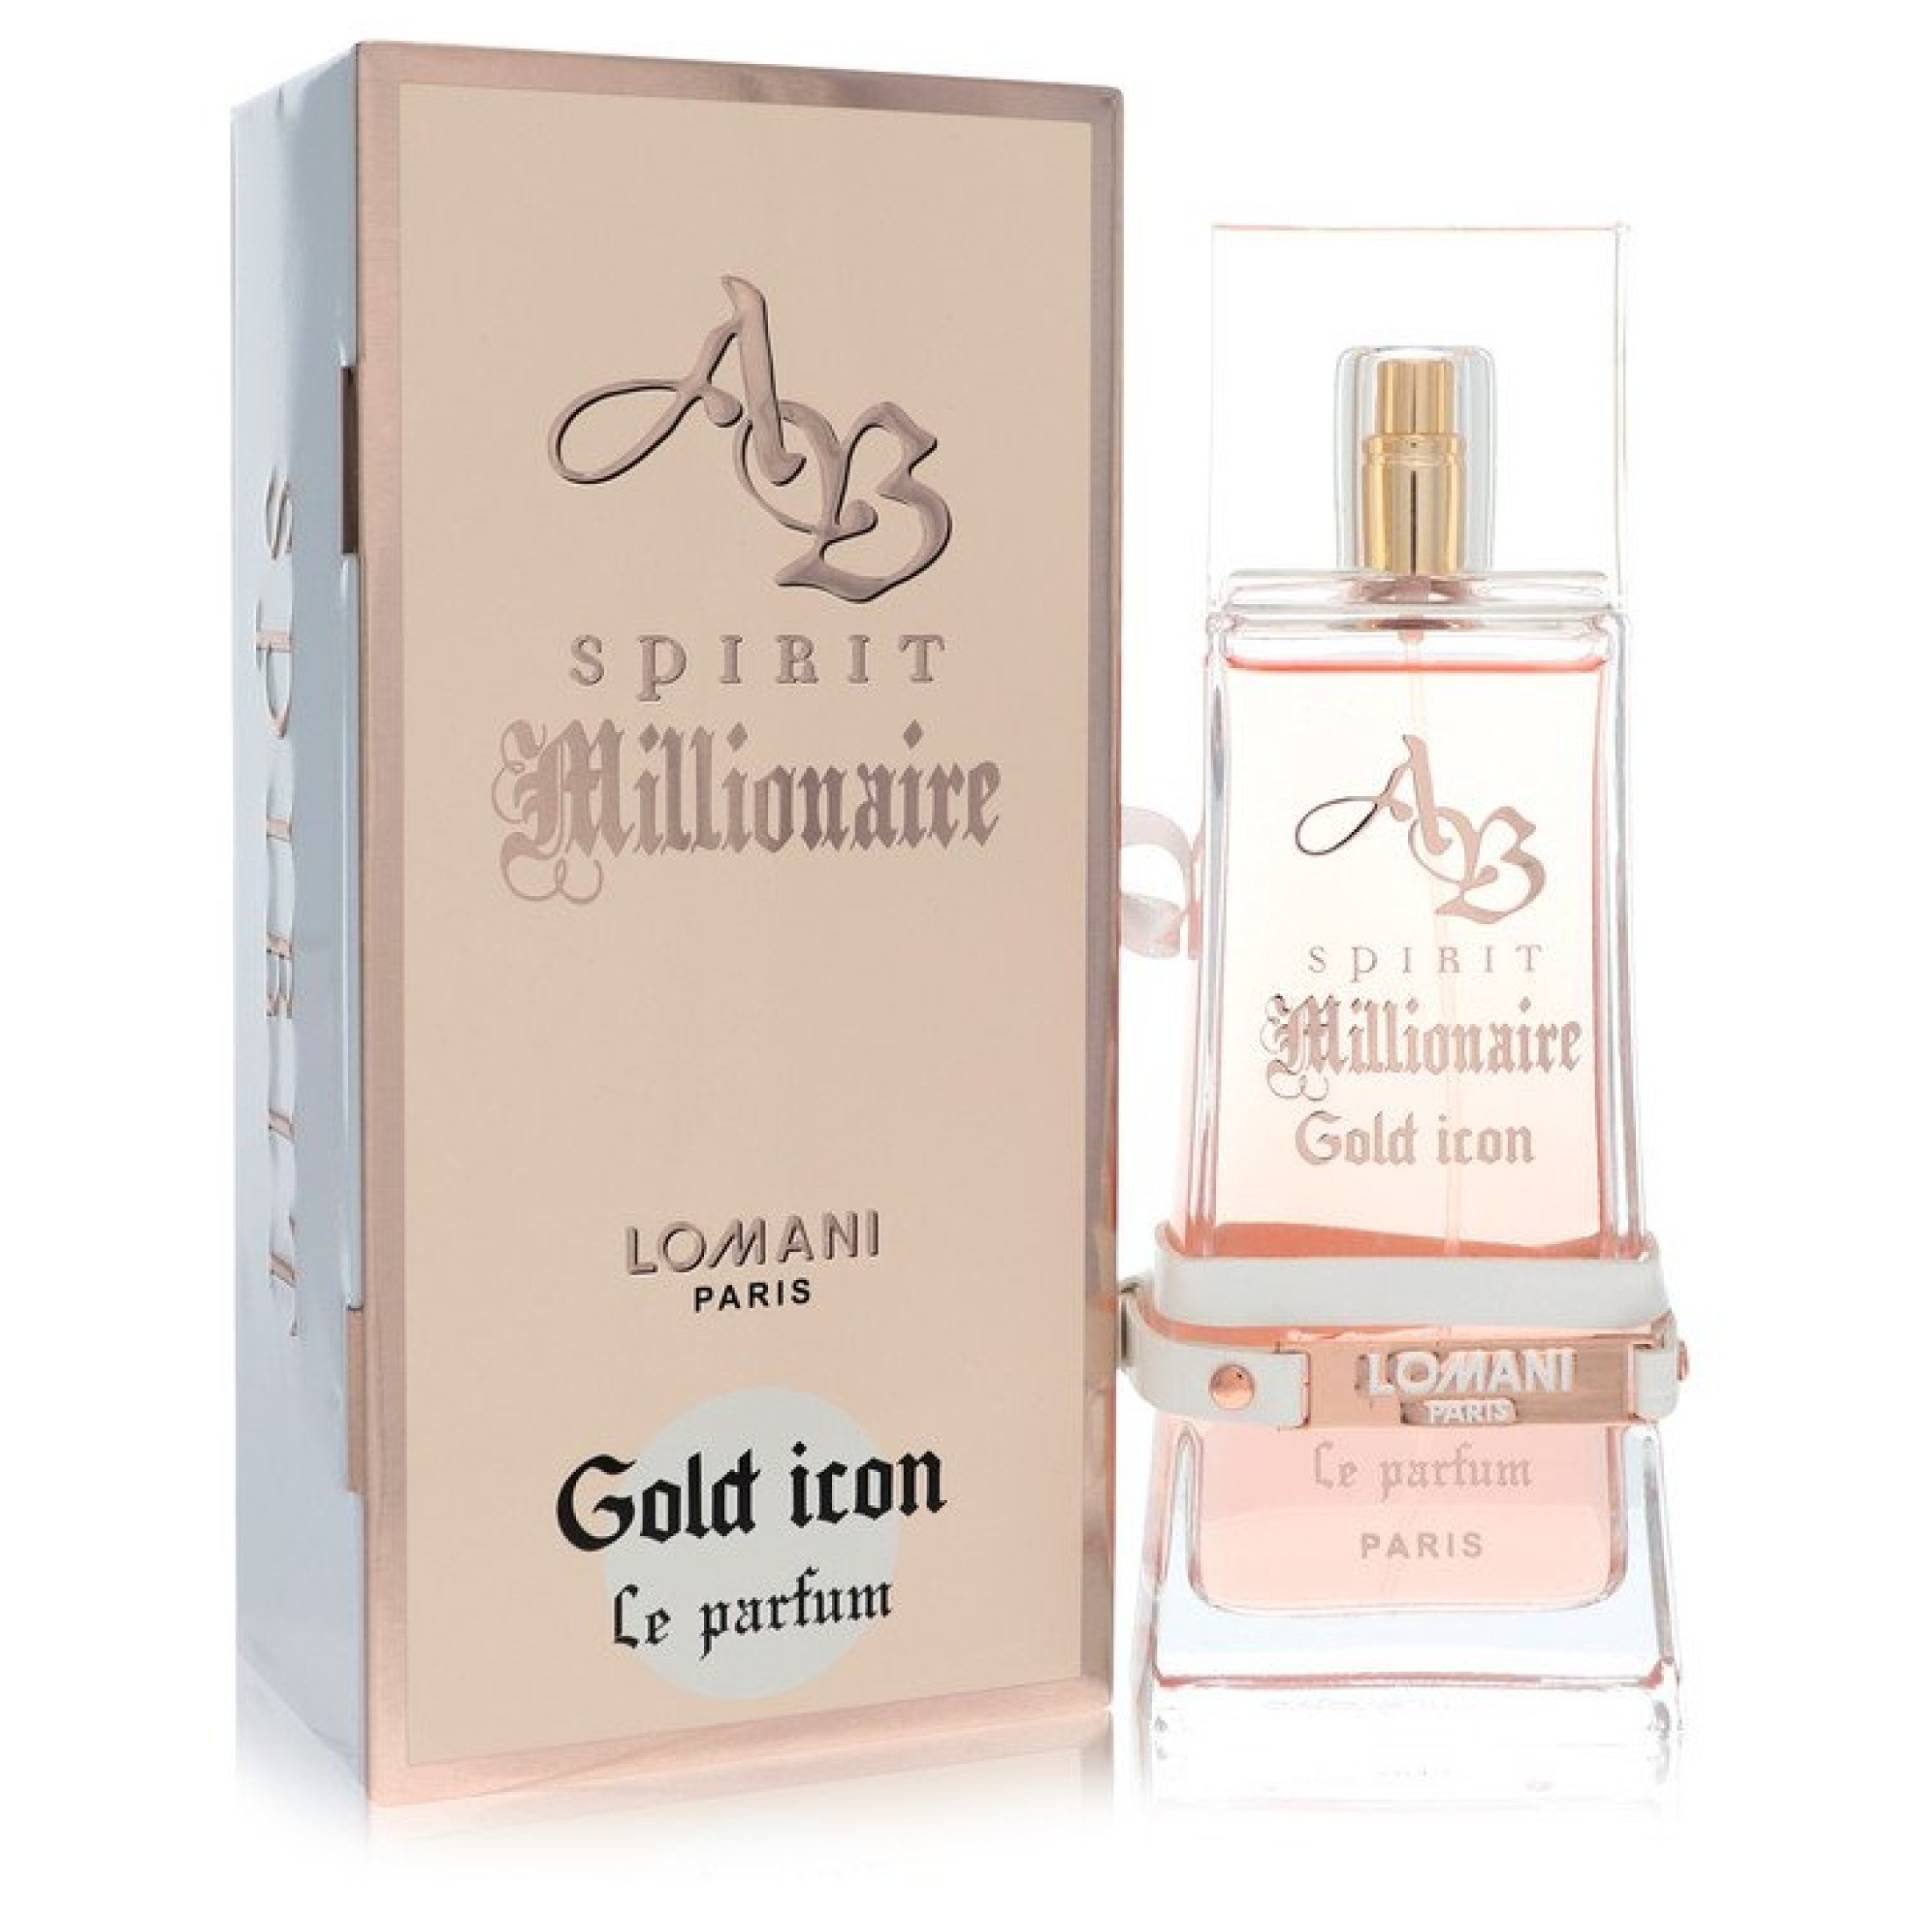 Lomani Ab Spirit Millionaire Gold Icon Eau De Parfum Spray 98 ml von Lomani